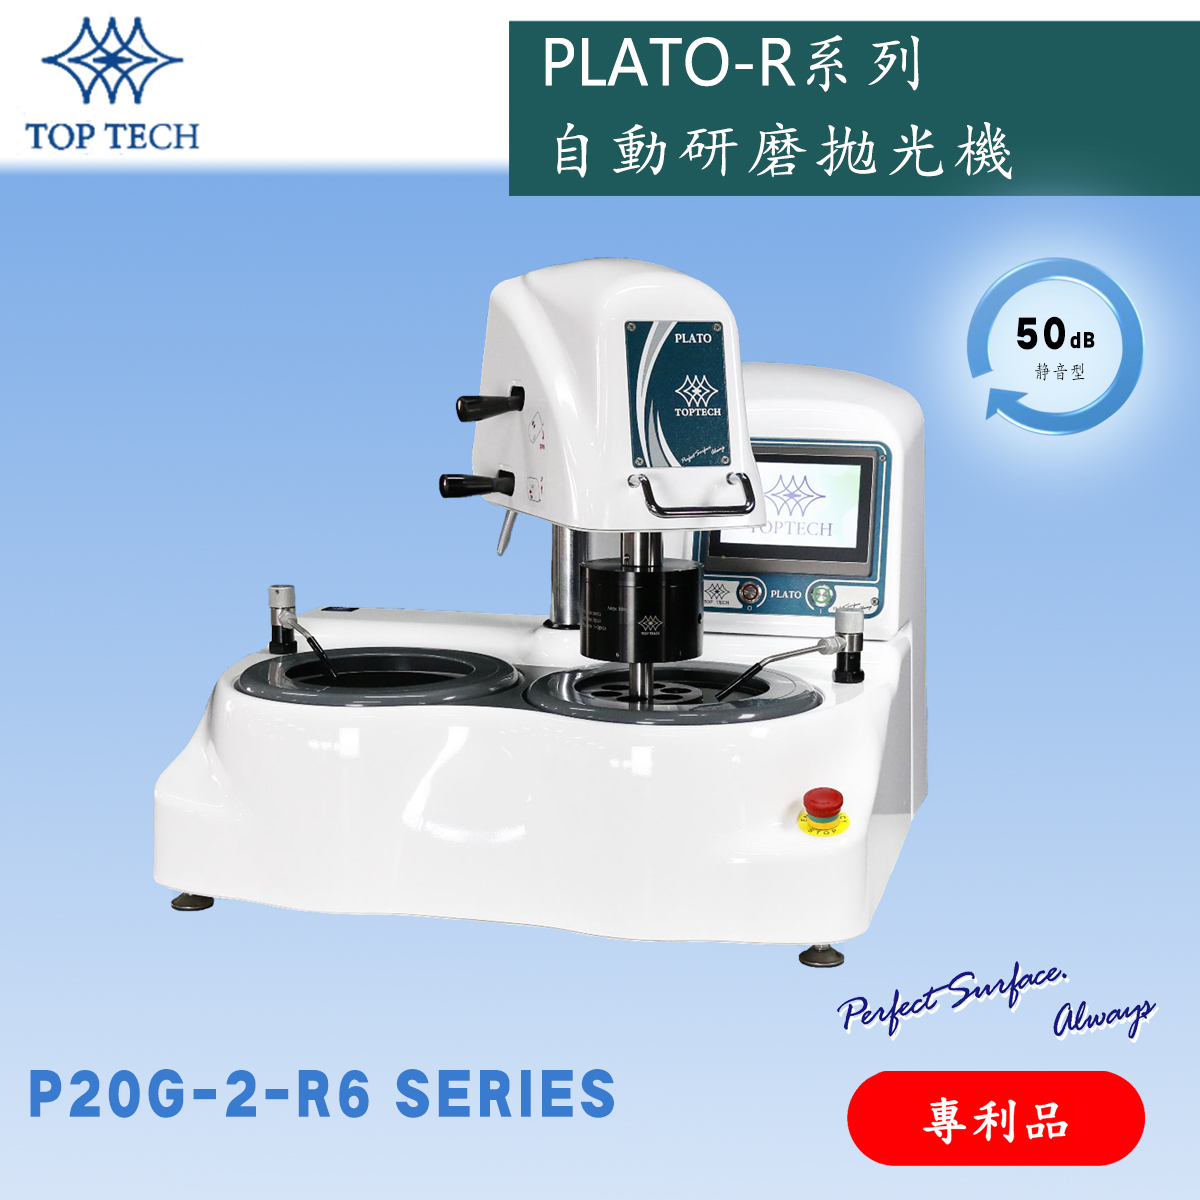 PLATO-R系列 自动研磨抛光机